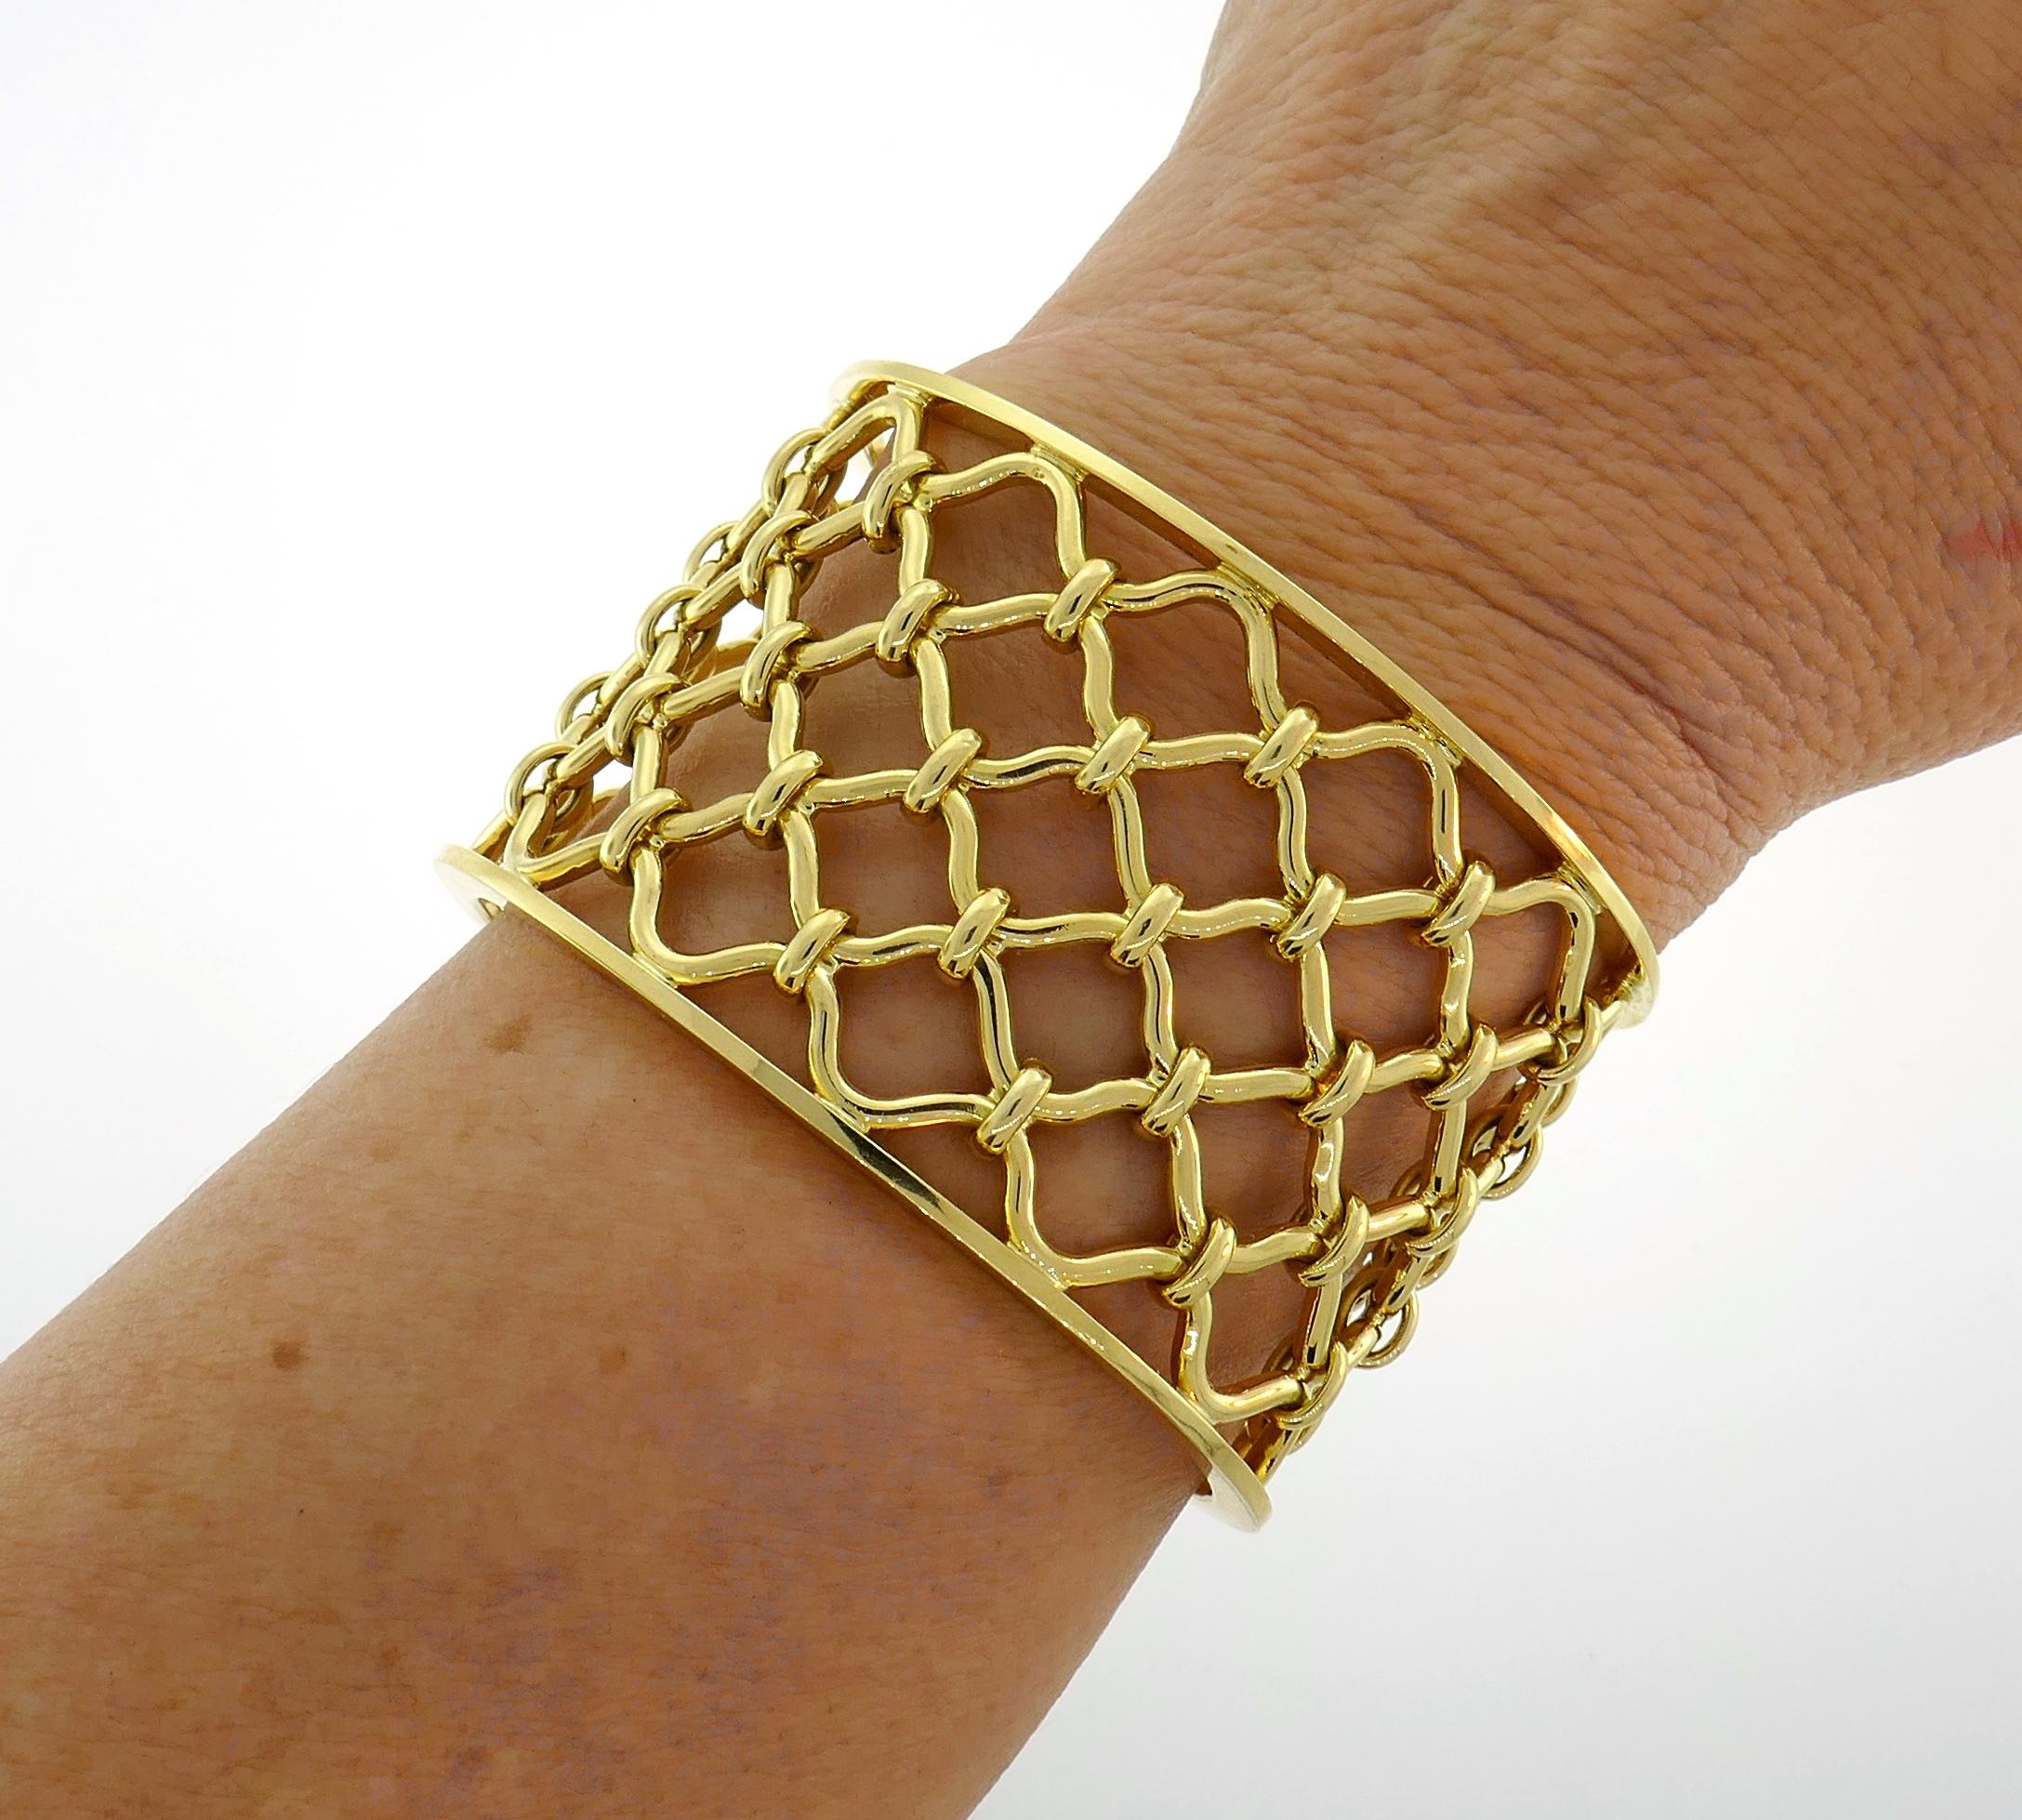 Fabulous 18 karat yellow gold cuff bracelet created by Verdura. Belongs to 